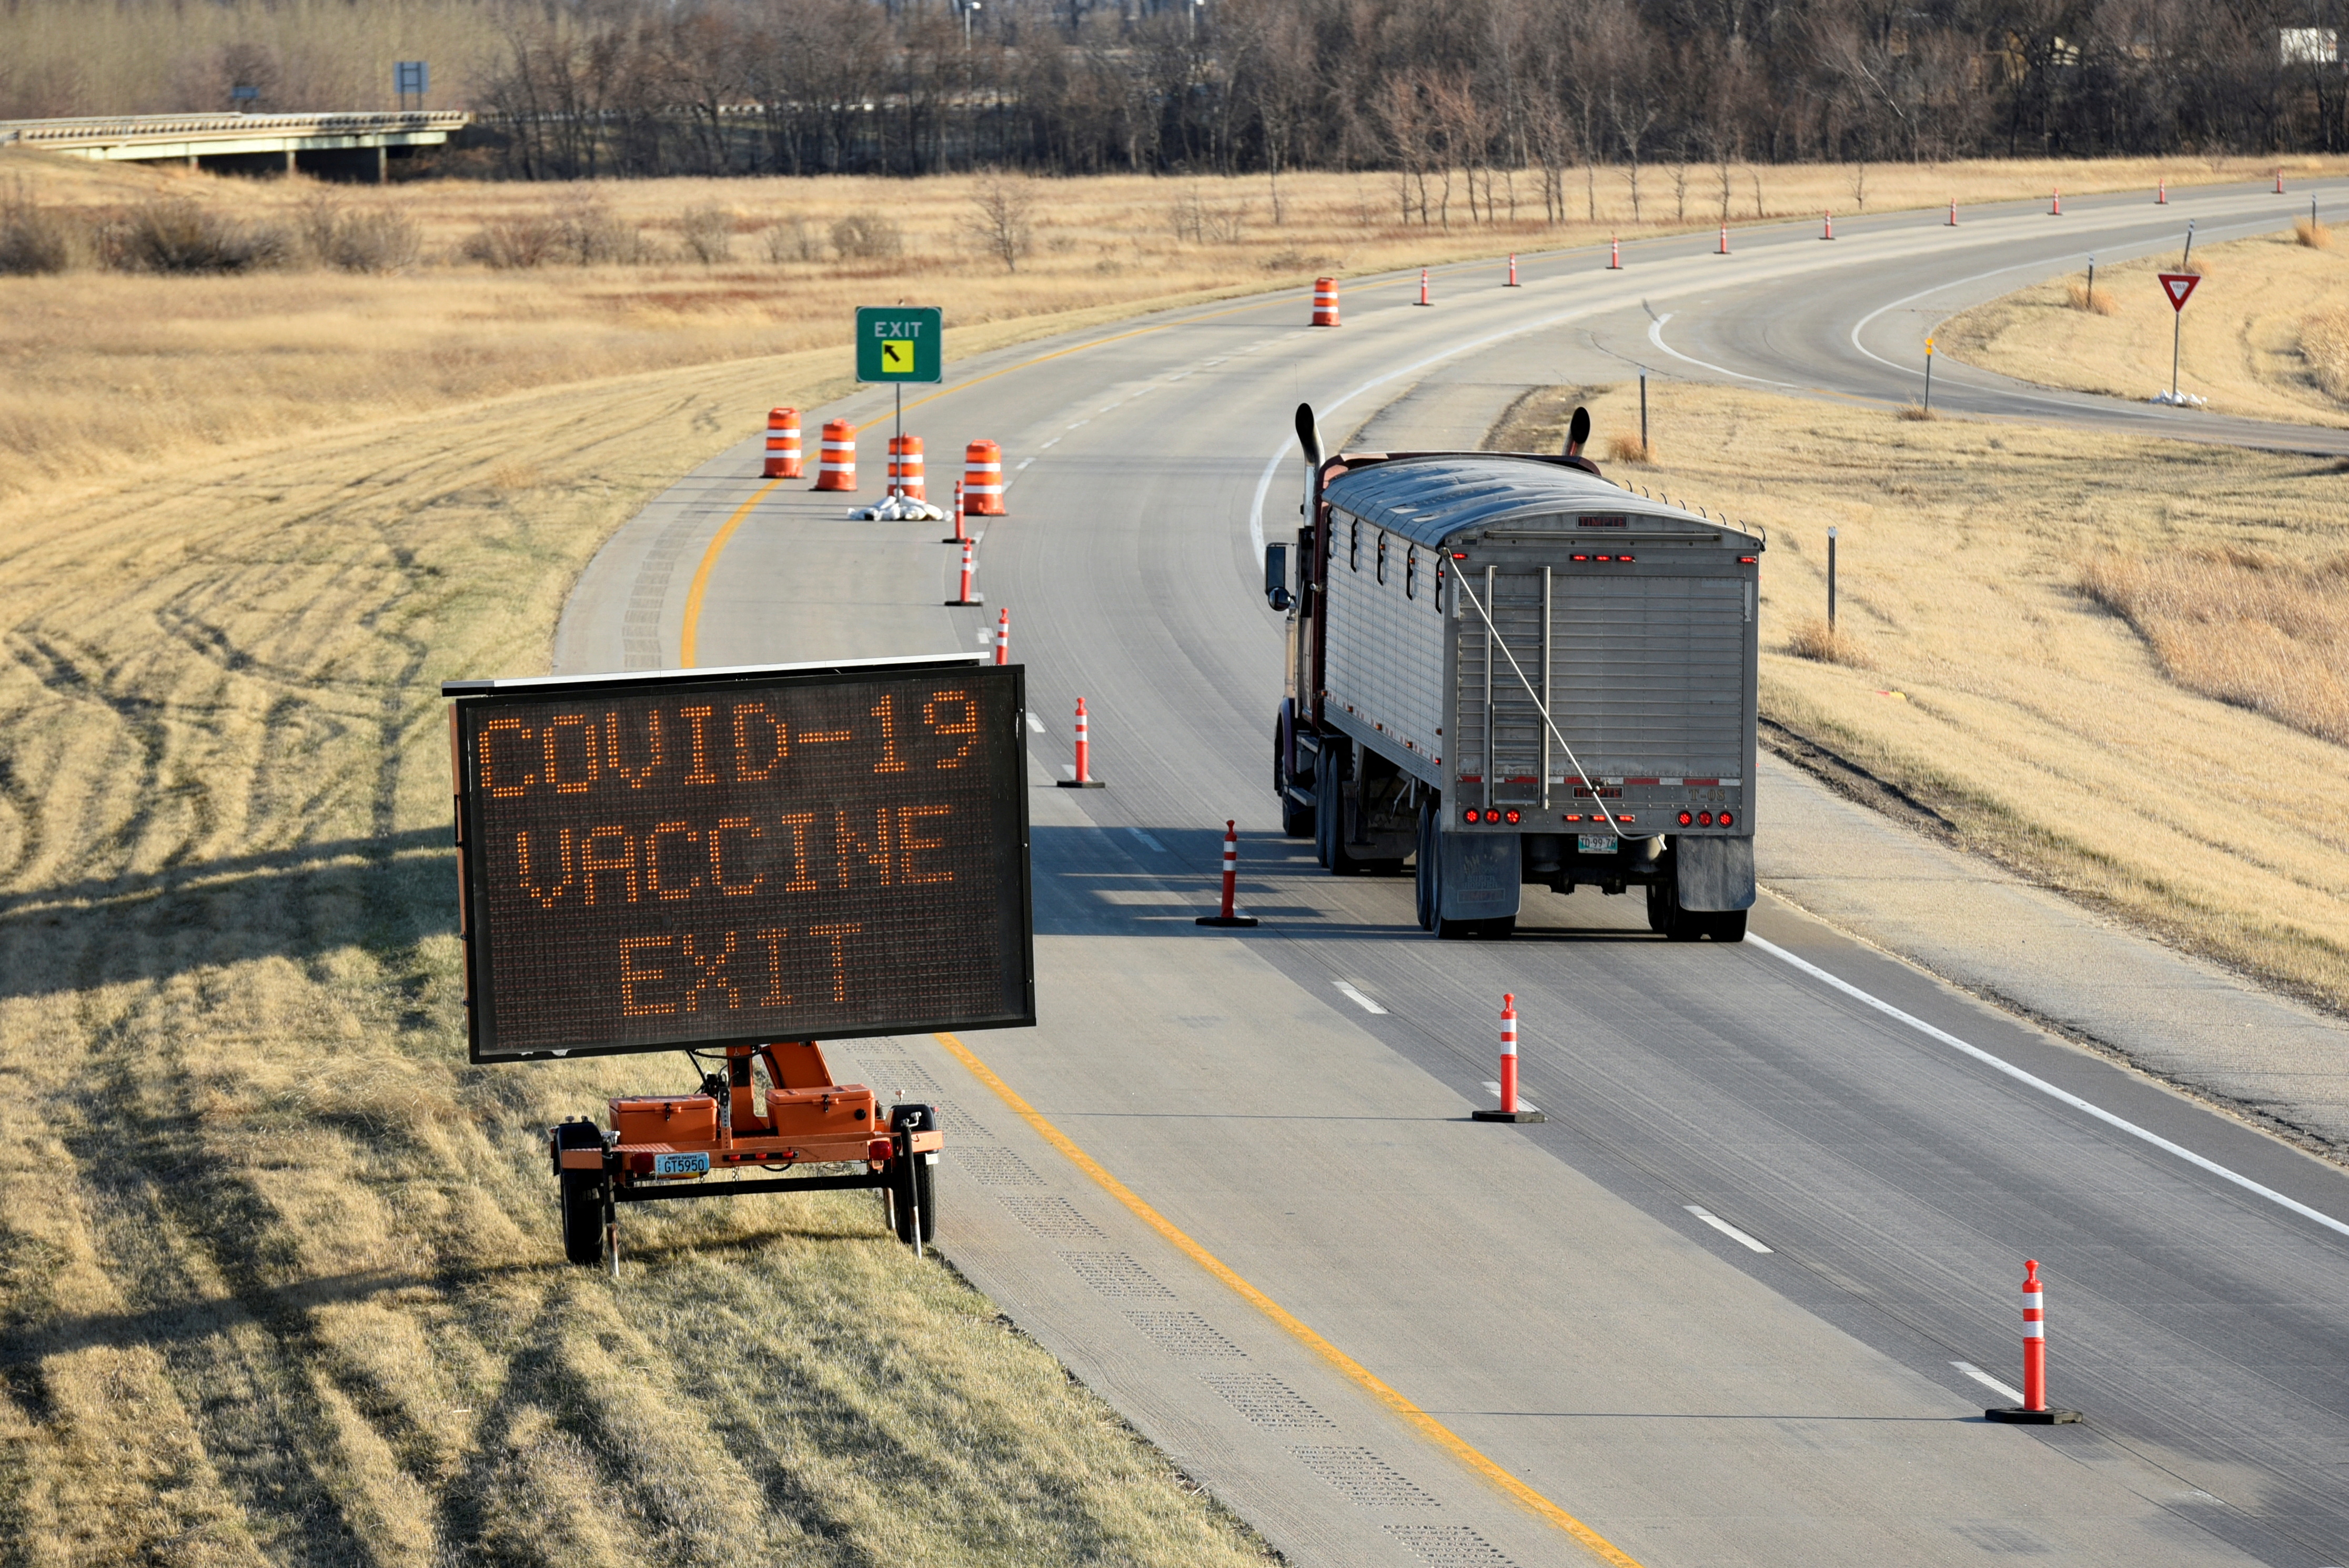 Manitoba-based truckers transporting goods to and from the U.S. get vaccinated against coronavirus disease (COVID-19), North Dakota